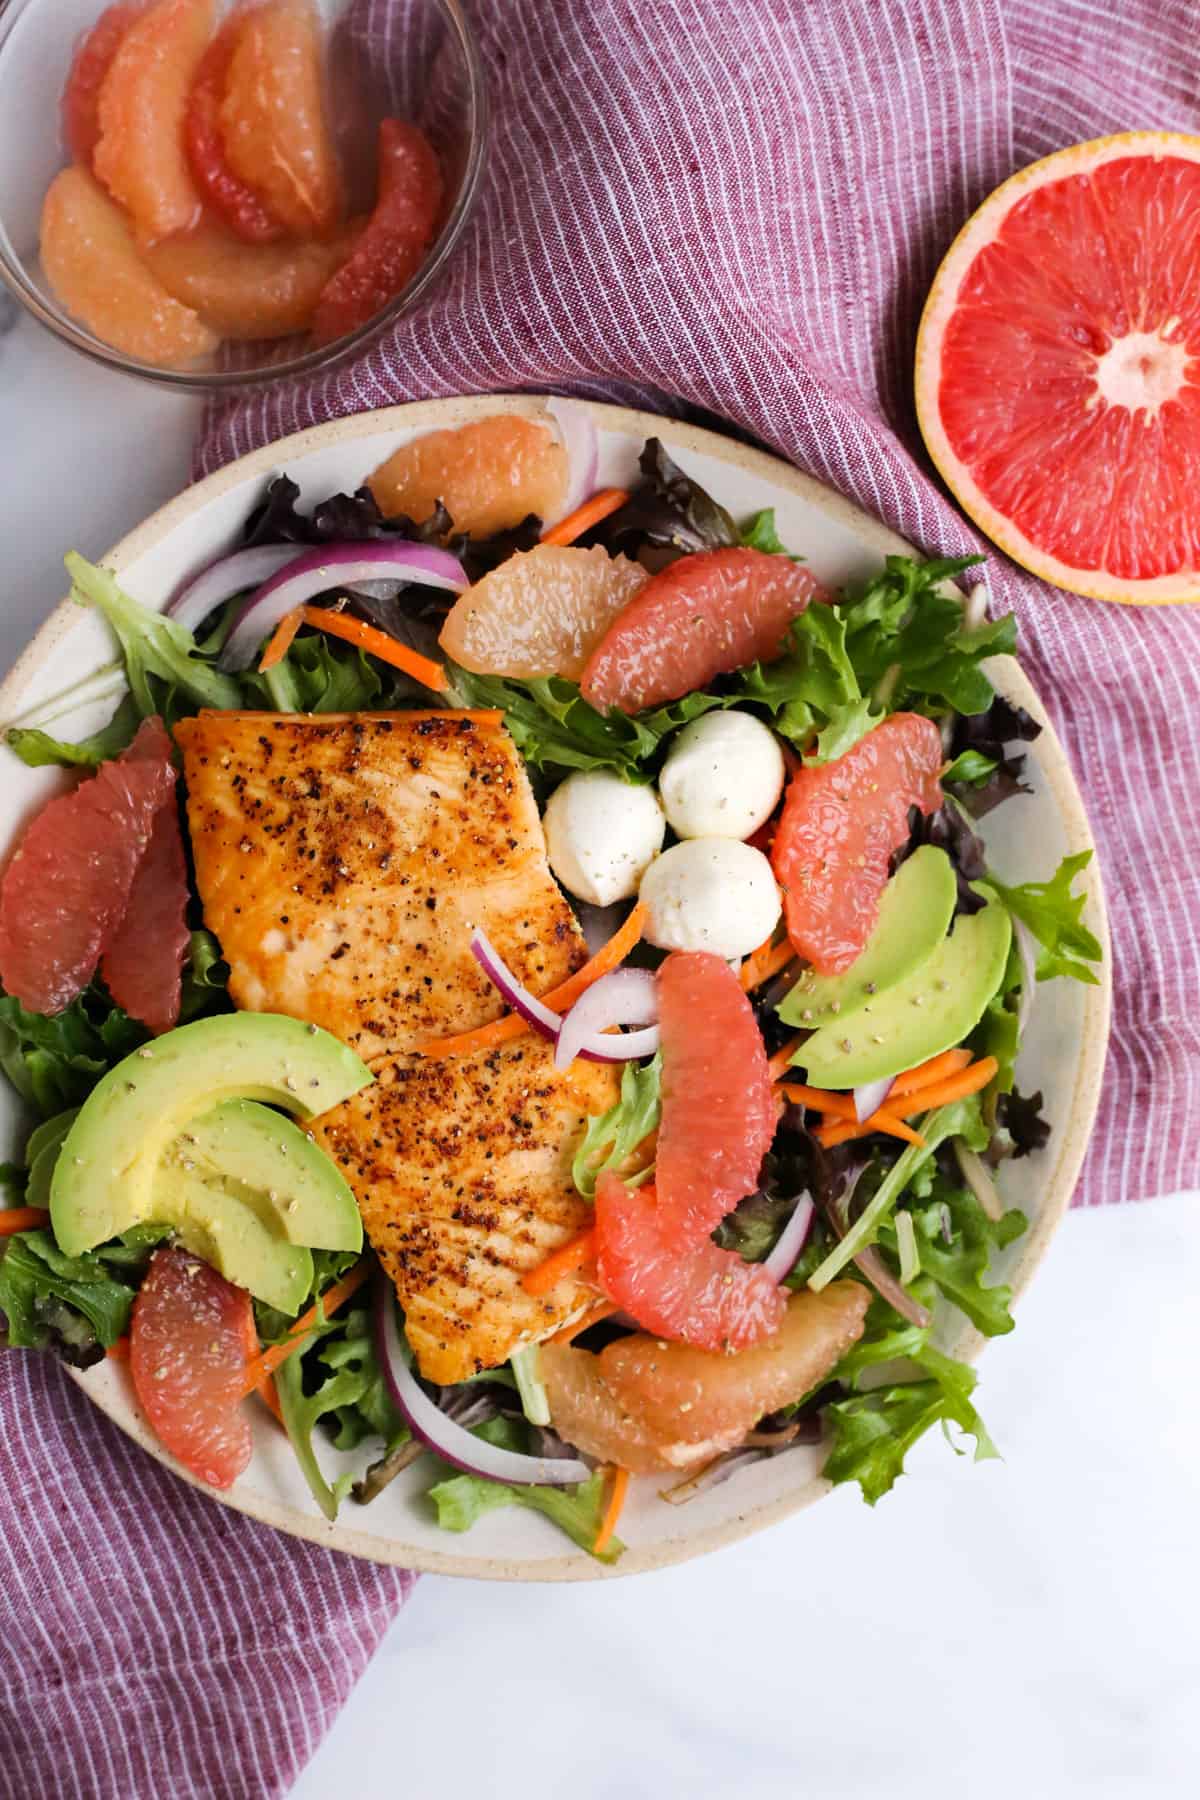 Overhead view of a colorful and vibrant salad featuring seared Atlantic salmon, sliced avocado, grapefruit segments, fresh mozzarella, and fresh salad greens